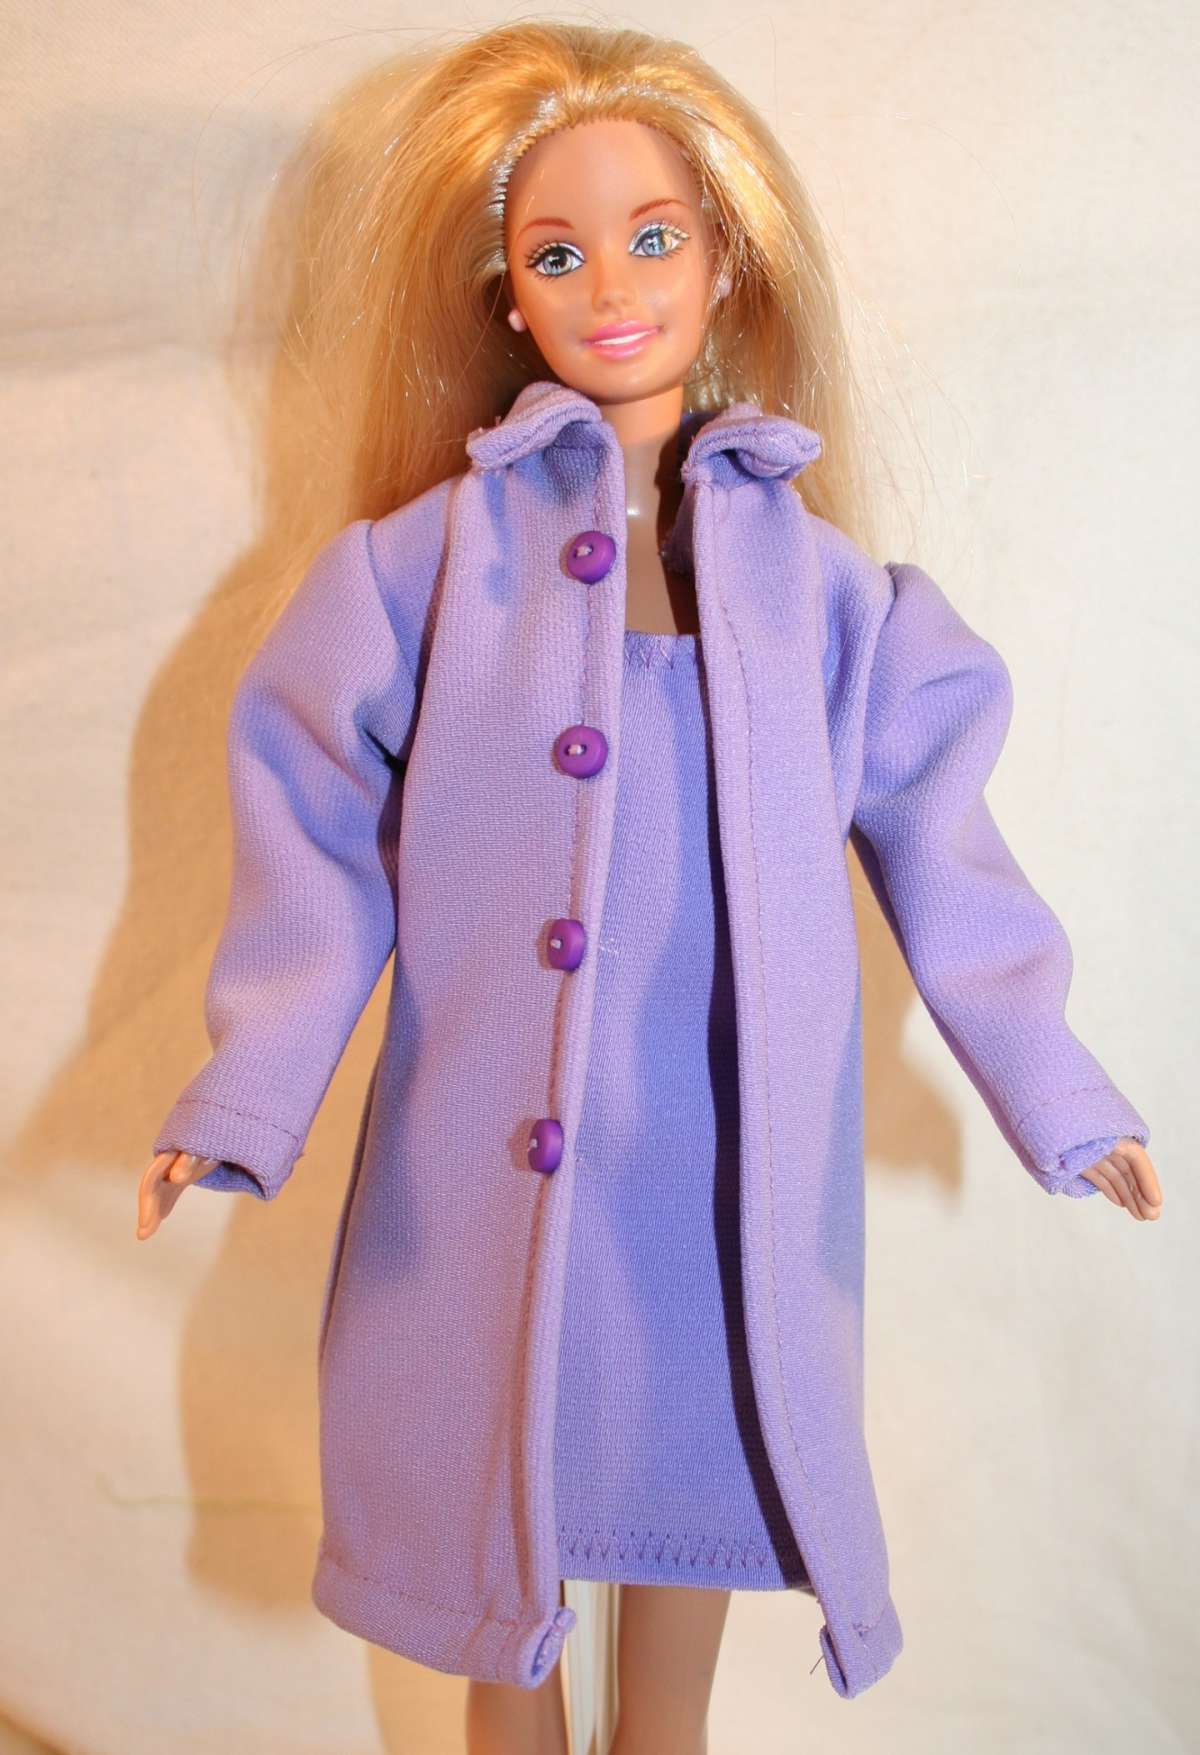 Barbie in look lilla